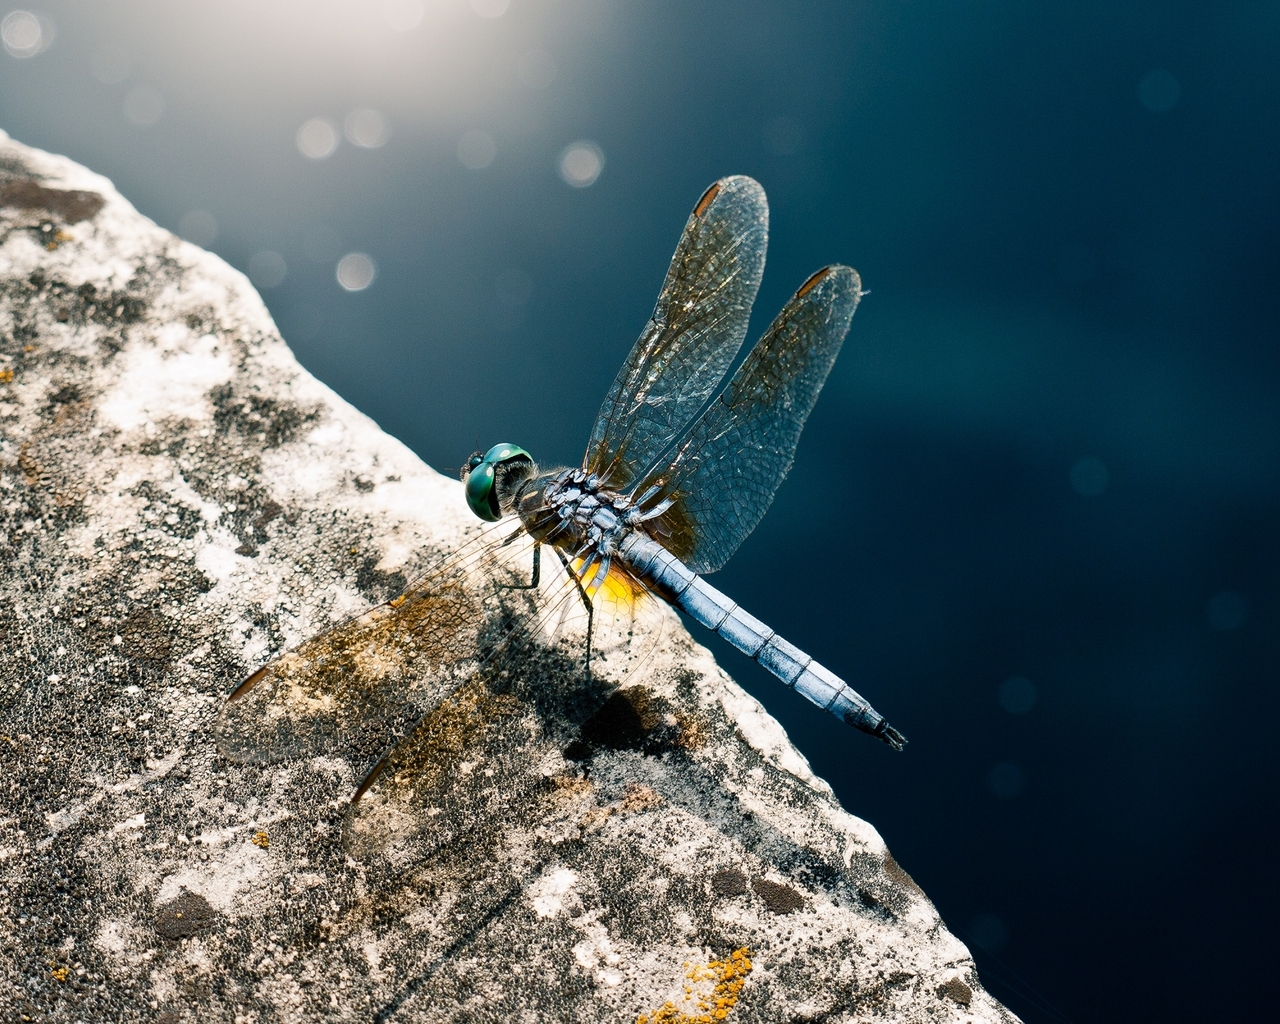 Image: Dragonfly, body, wings, eye, stone